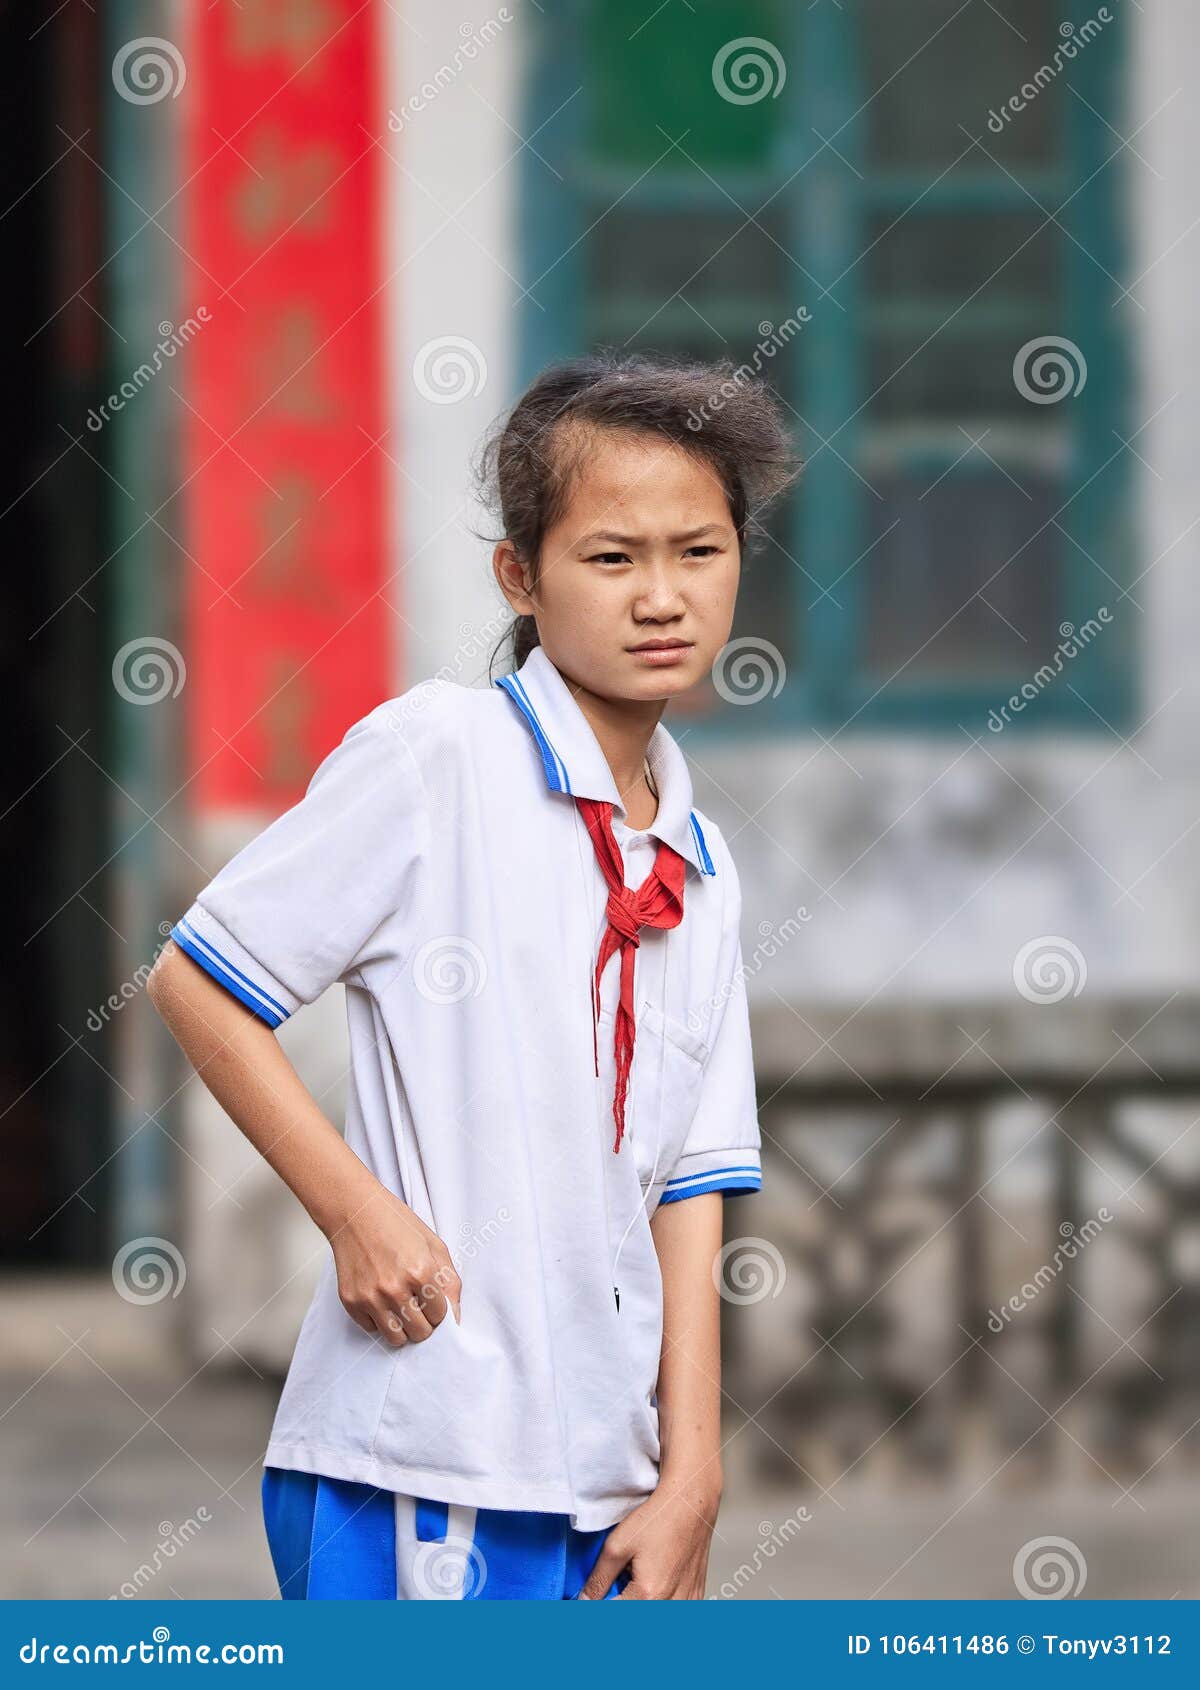 Little Asian School Girls